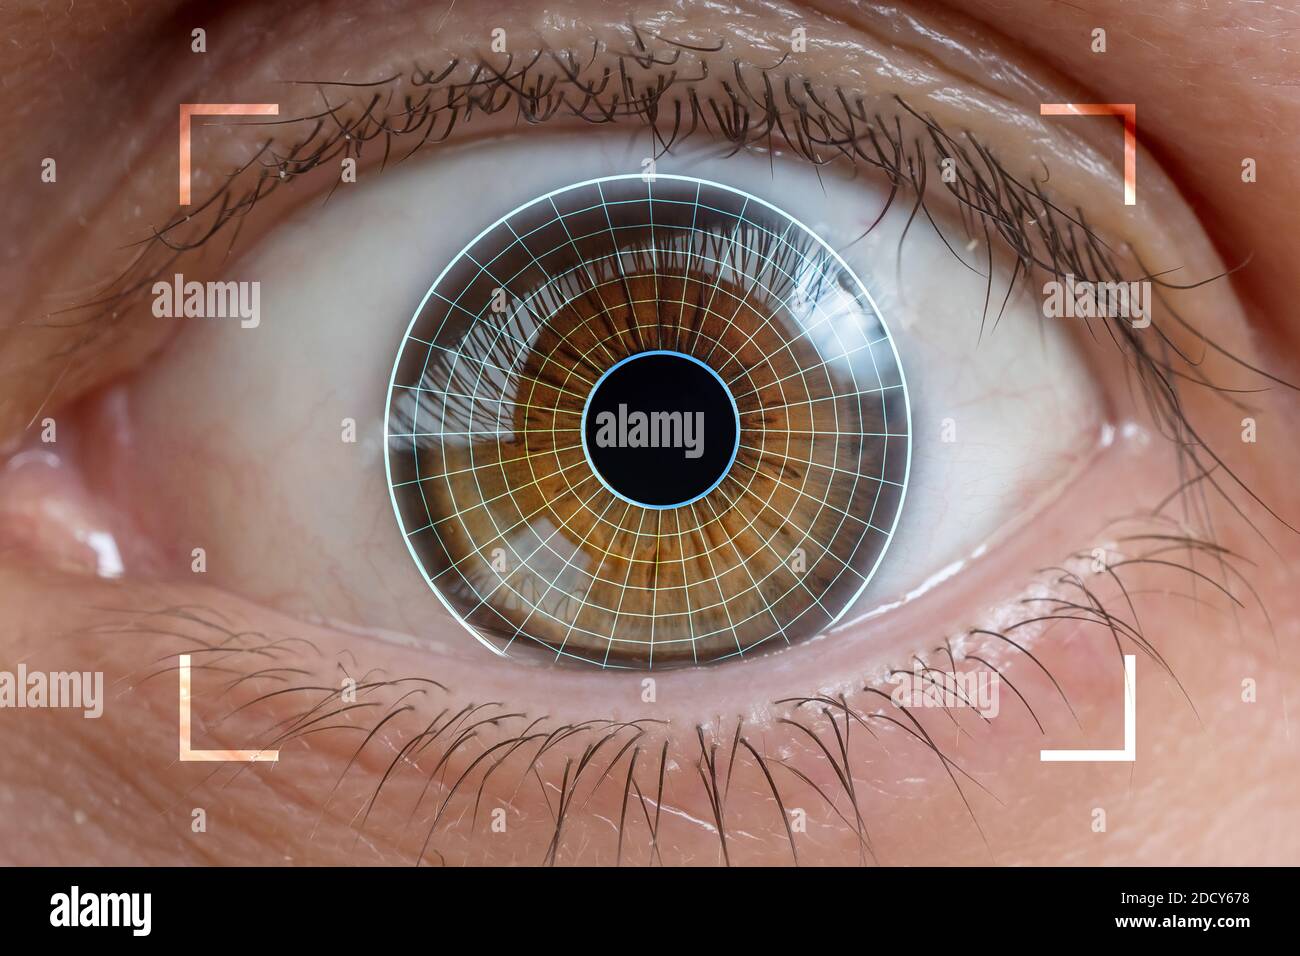 Biometrics eye hi-res stock photography and images - Alamy